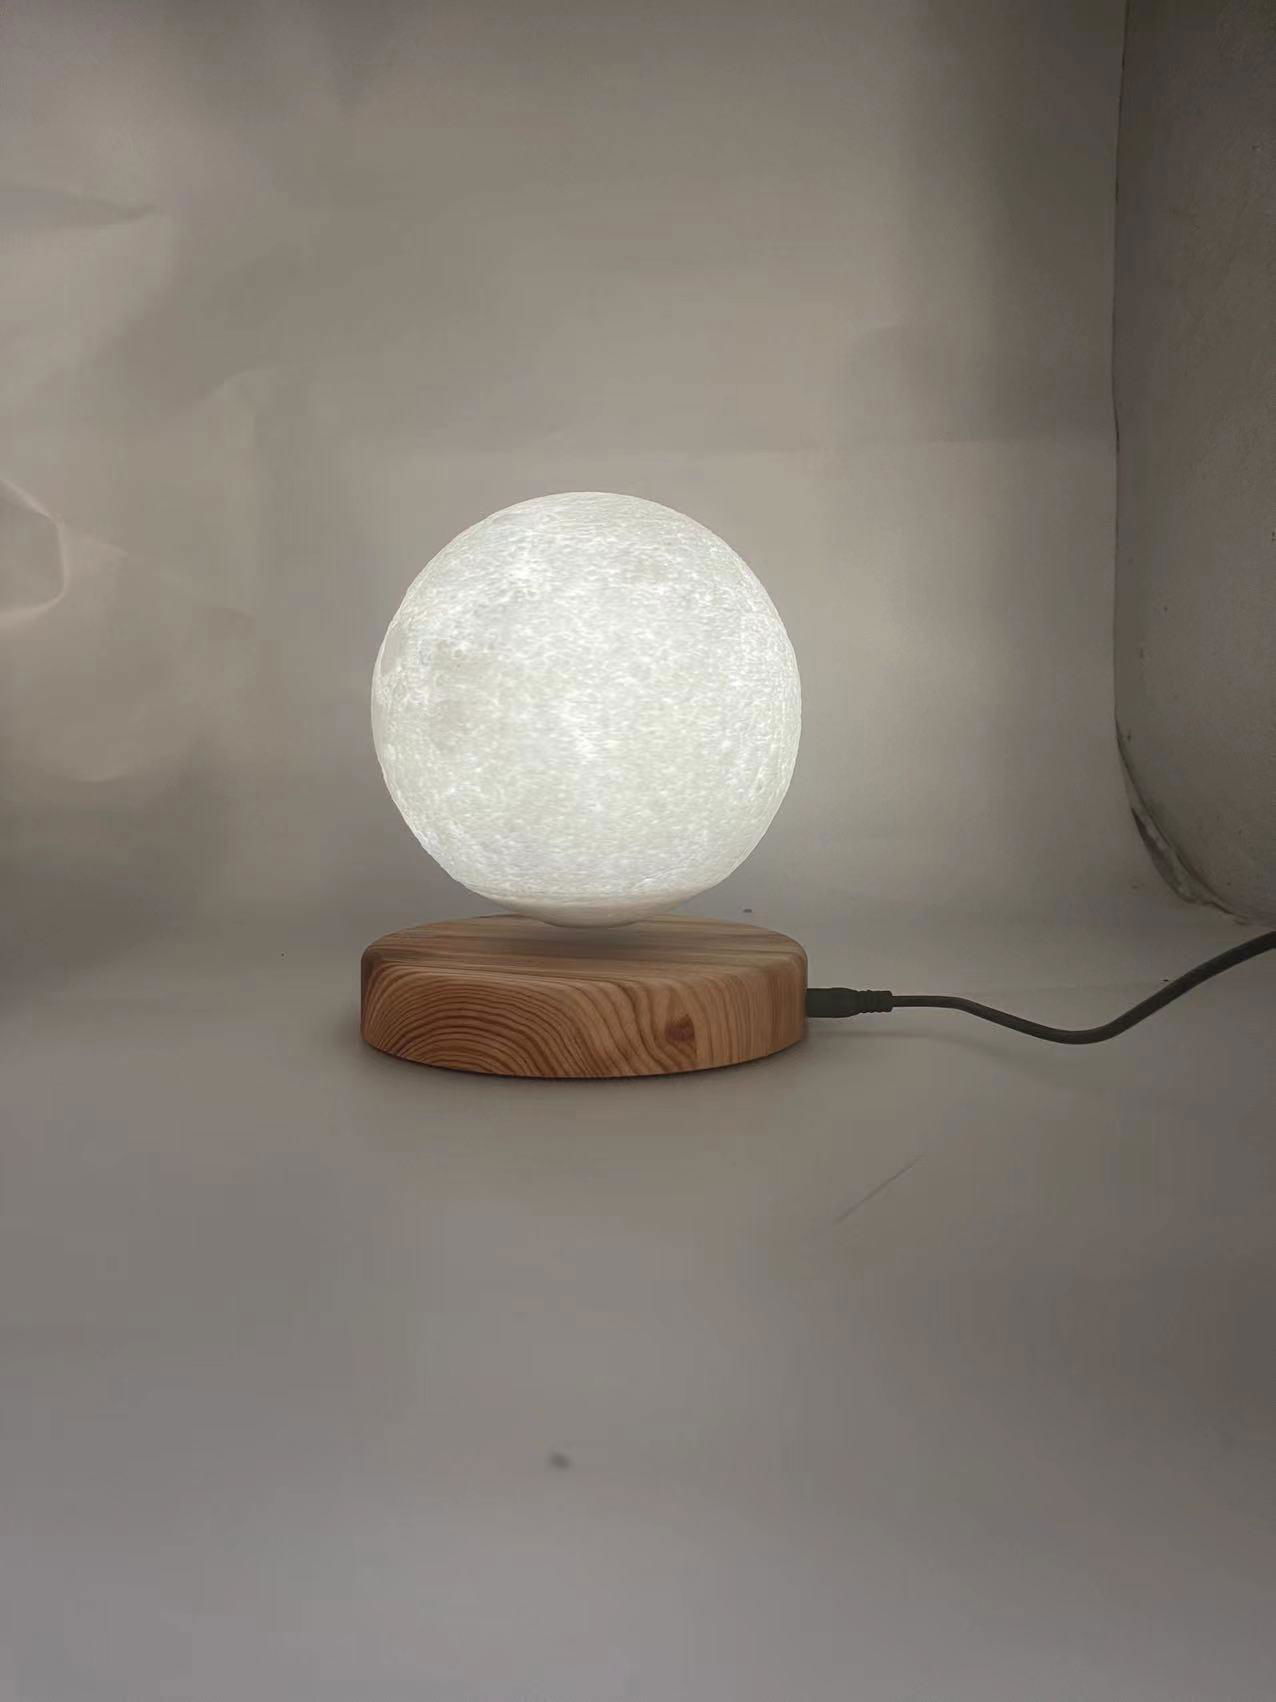 hotsale factory magnetic levitation desk luna ,floating 6inch moon light  2